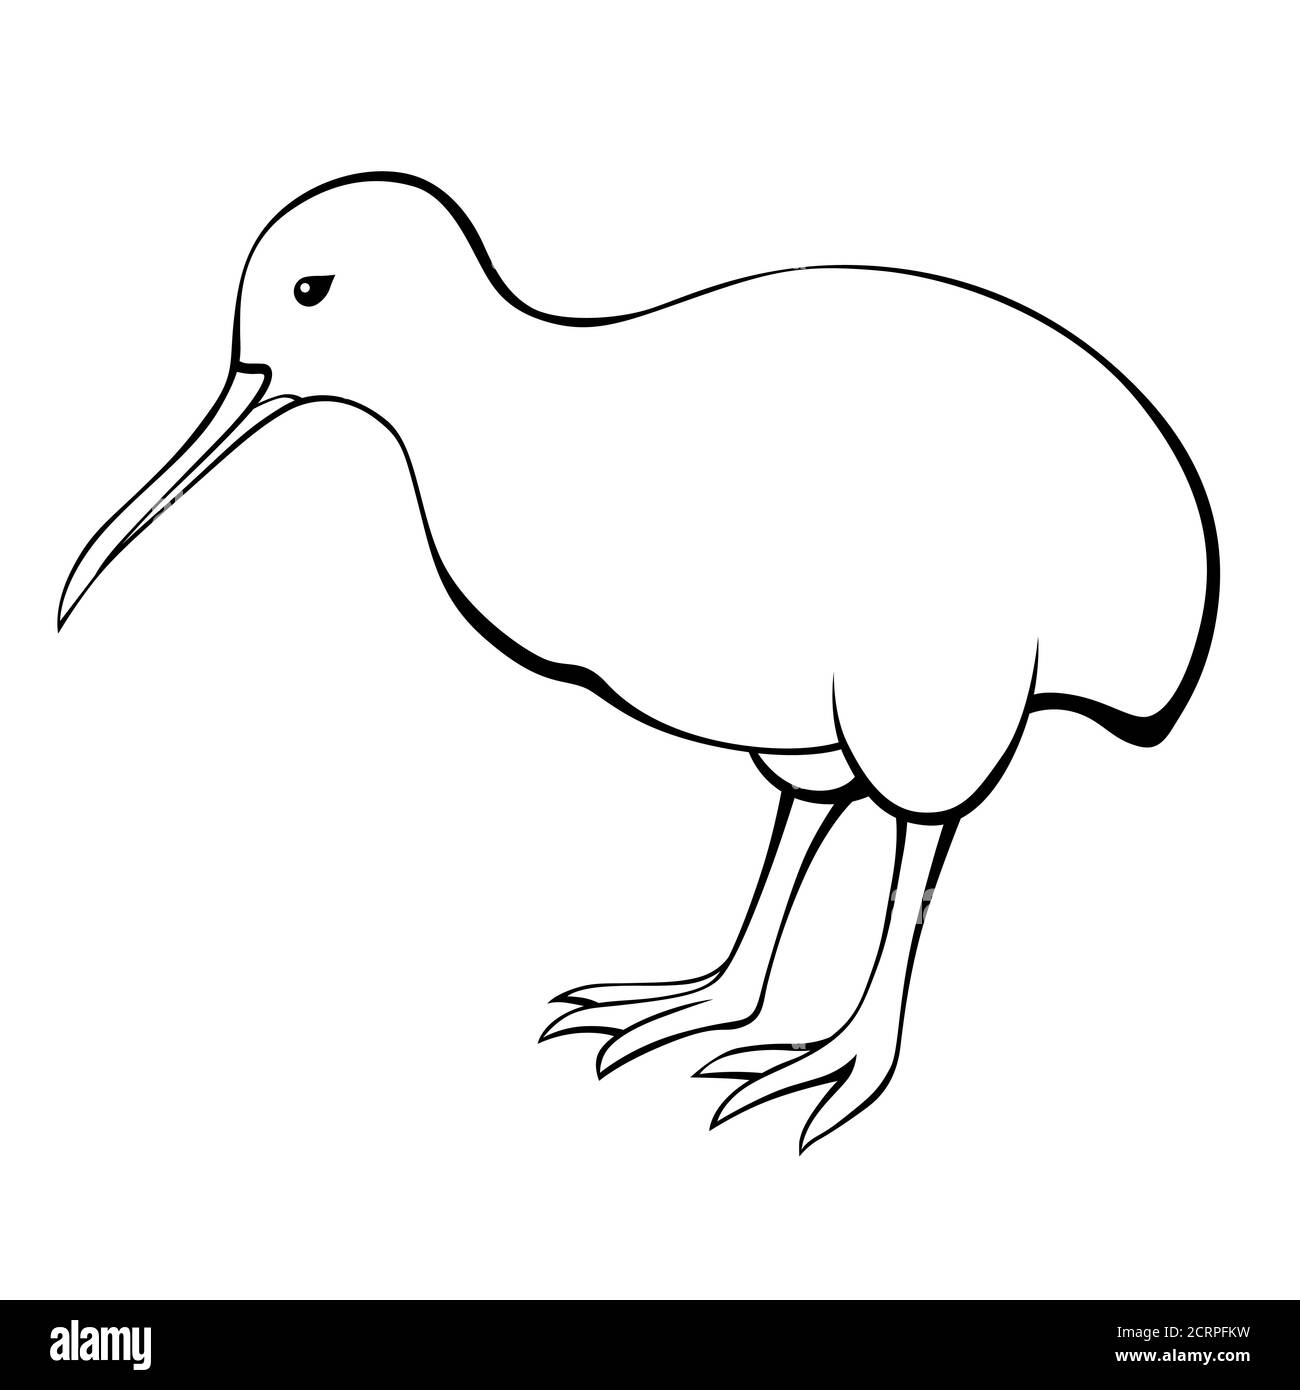 Kiwi Vogel schwarz weiß isoliert Illustration Vektor Stock Vektor